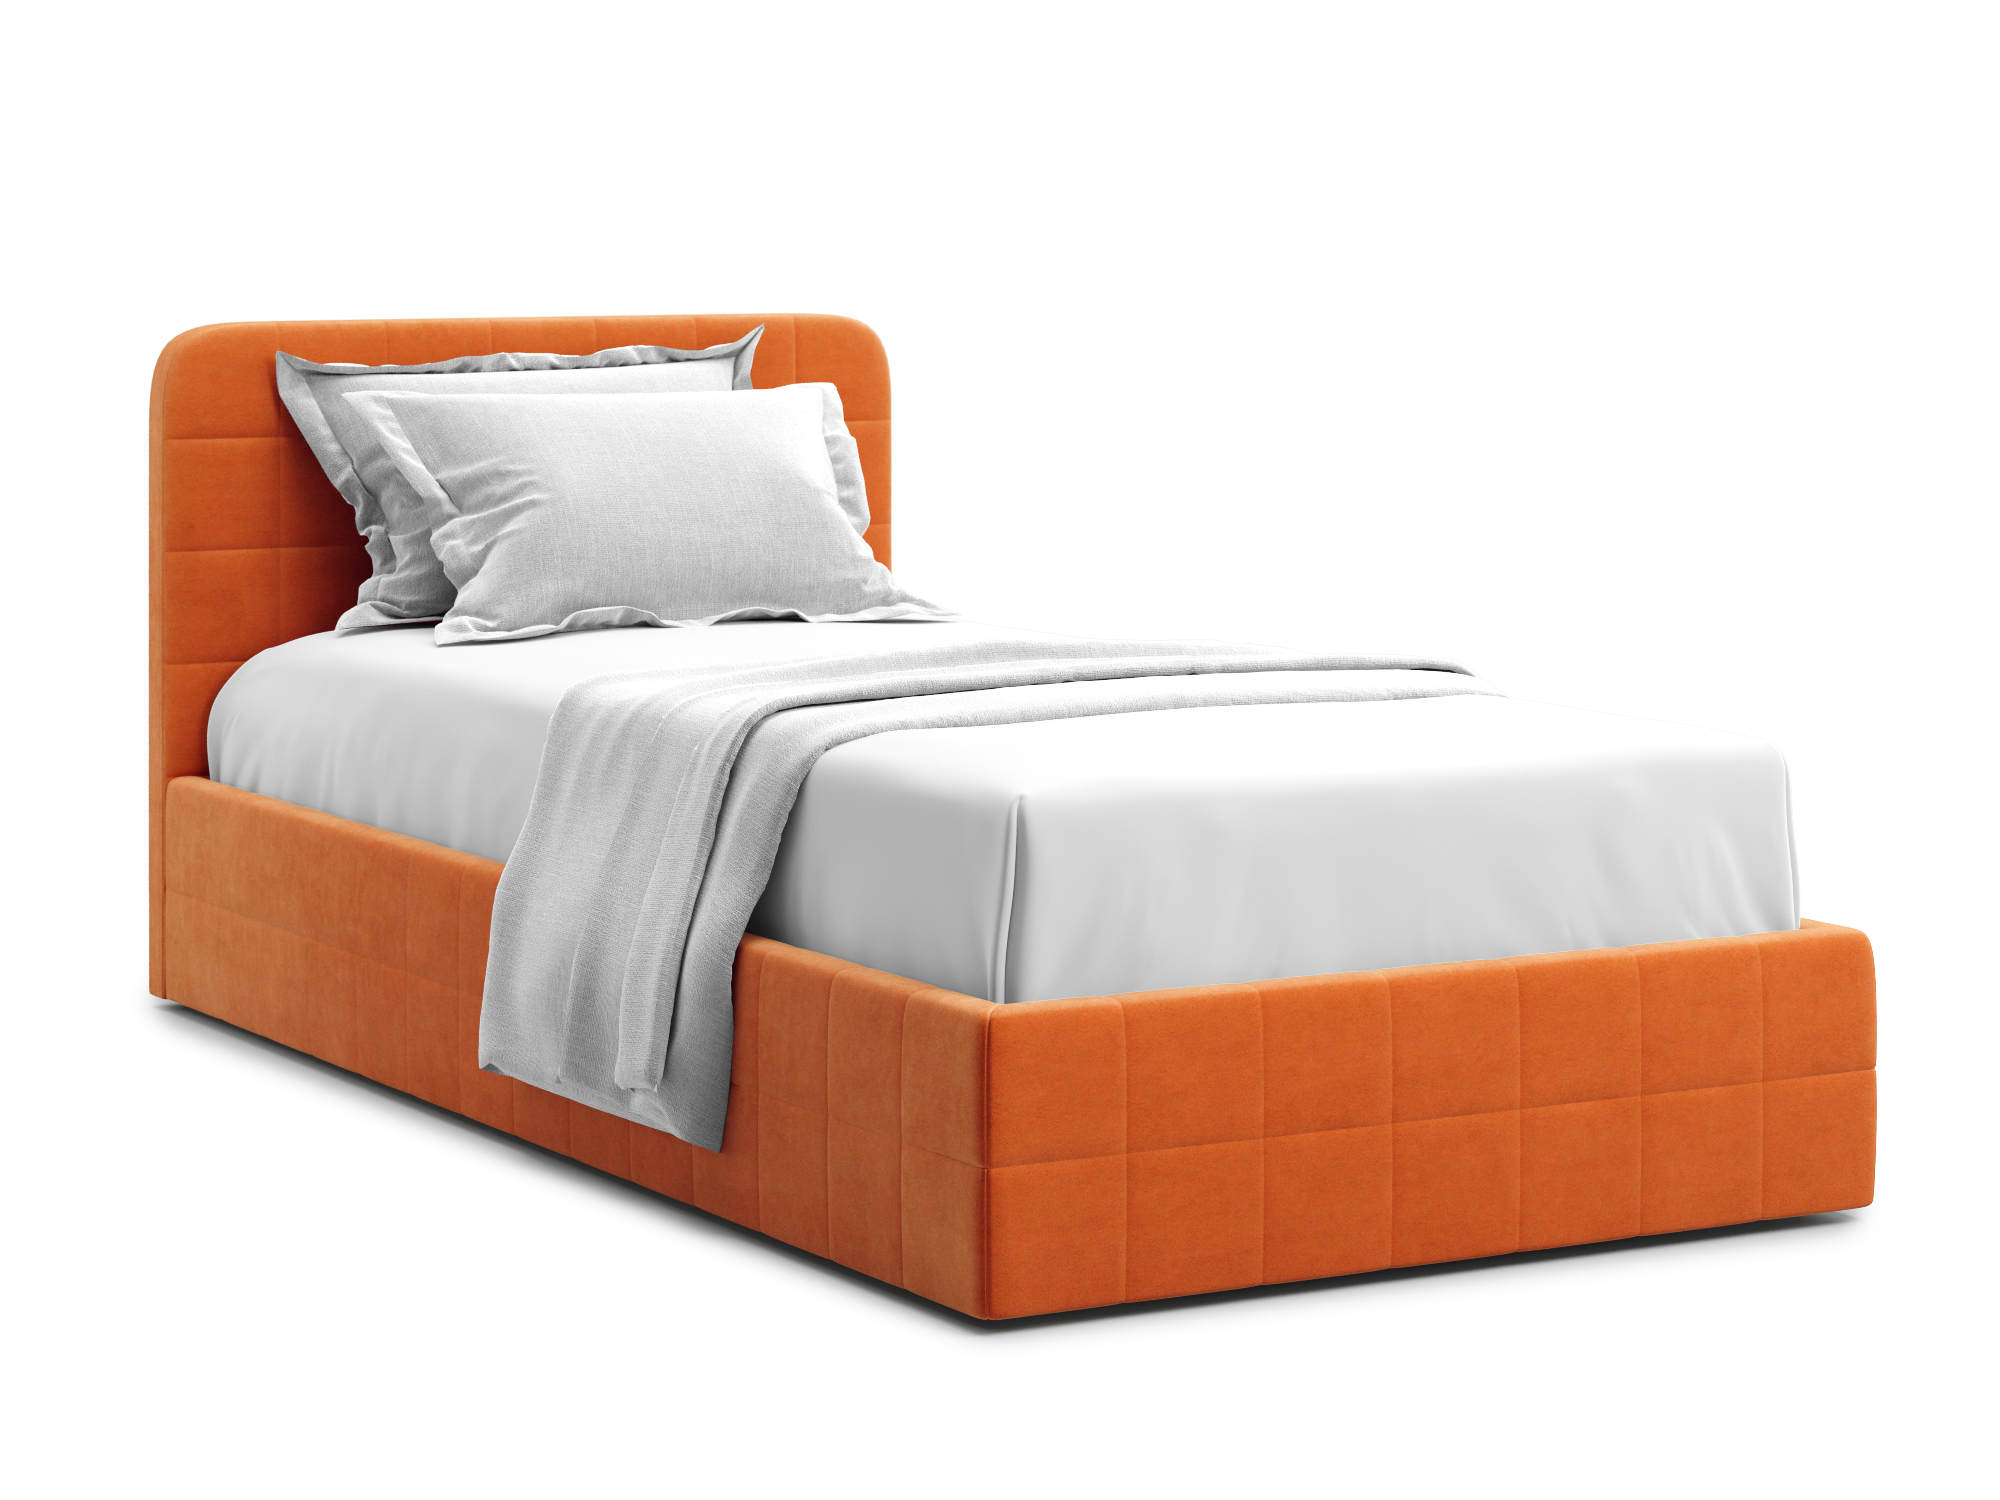 Кровать Adda 120 Velutto 27 Оранжевый, Массив, ДСП кровать adda 120 velutto 17 бежевый массив дсп